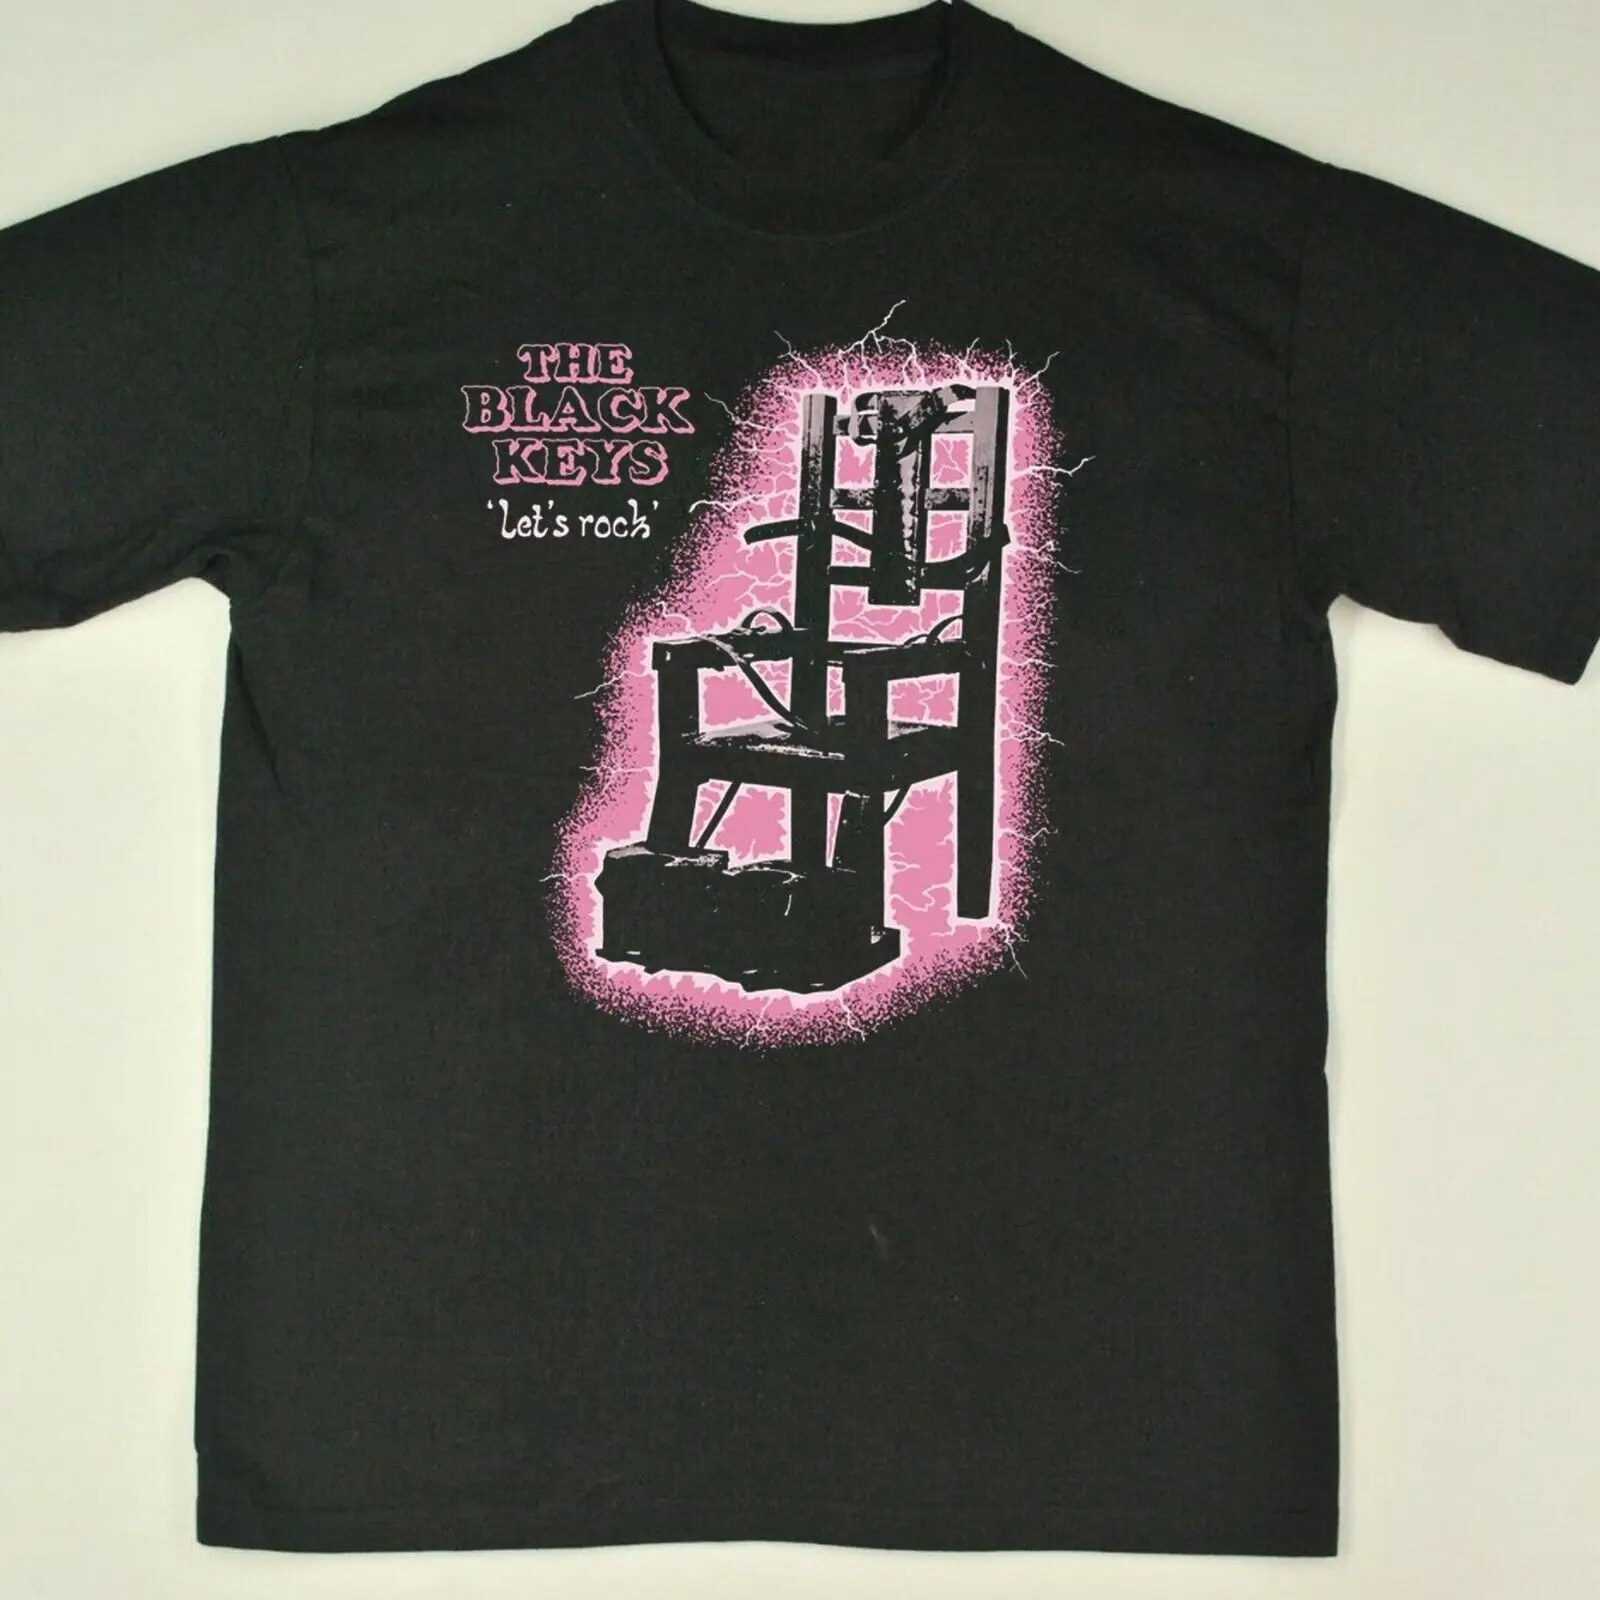 Новая популярная футболка The Black Keys Tour В подарок фанатам Мужская рубашка S-5XL 1N3529 с длинными рукавами